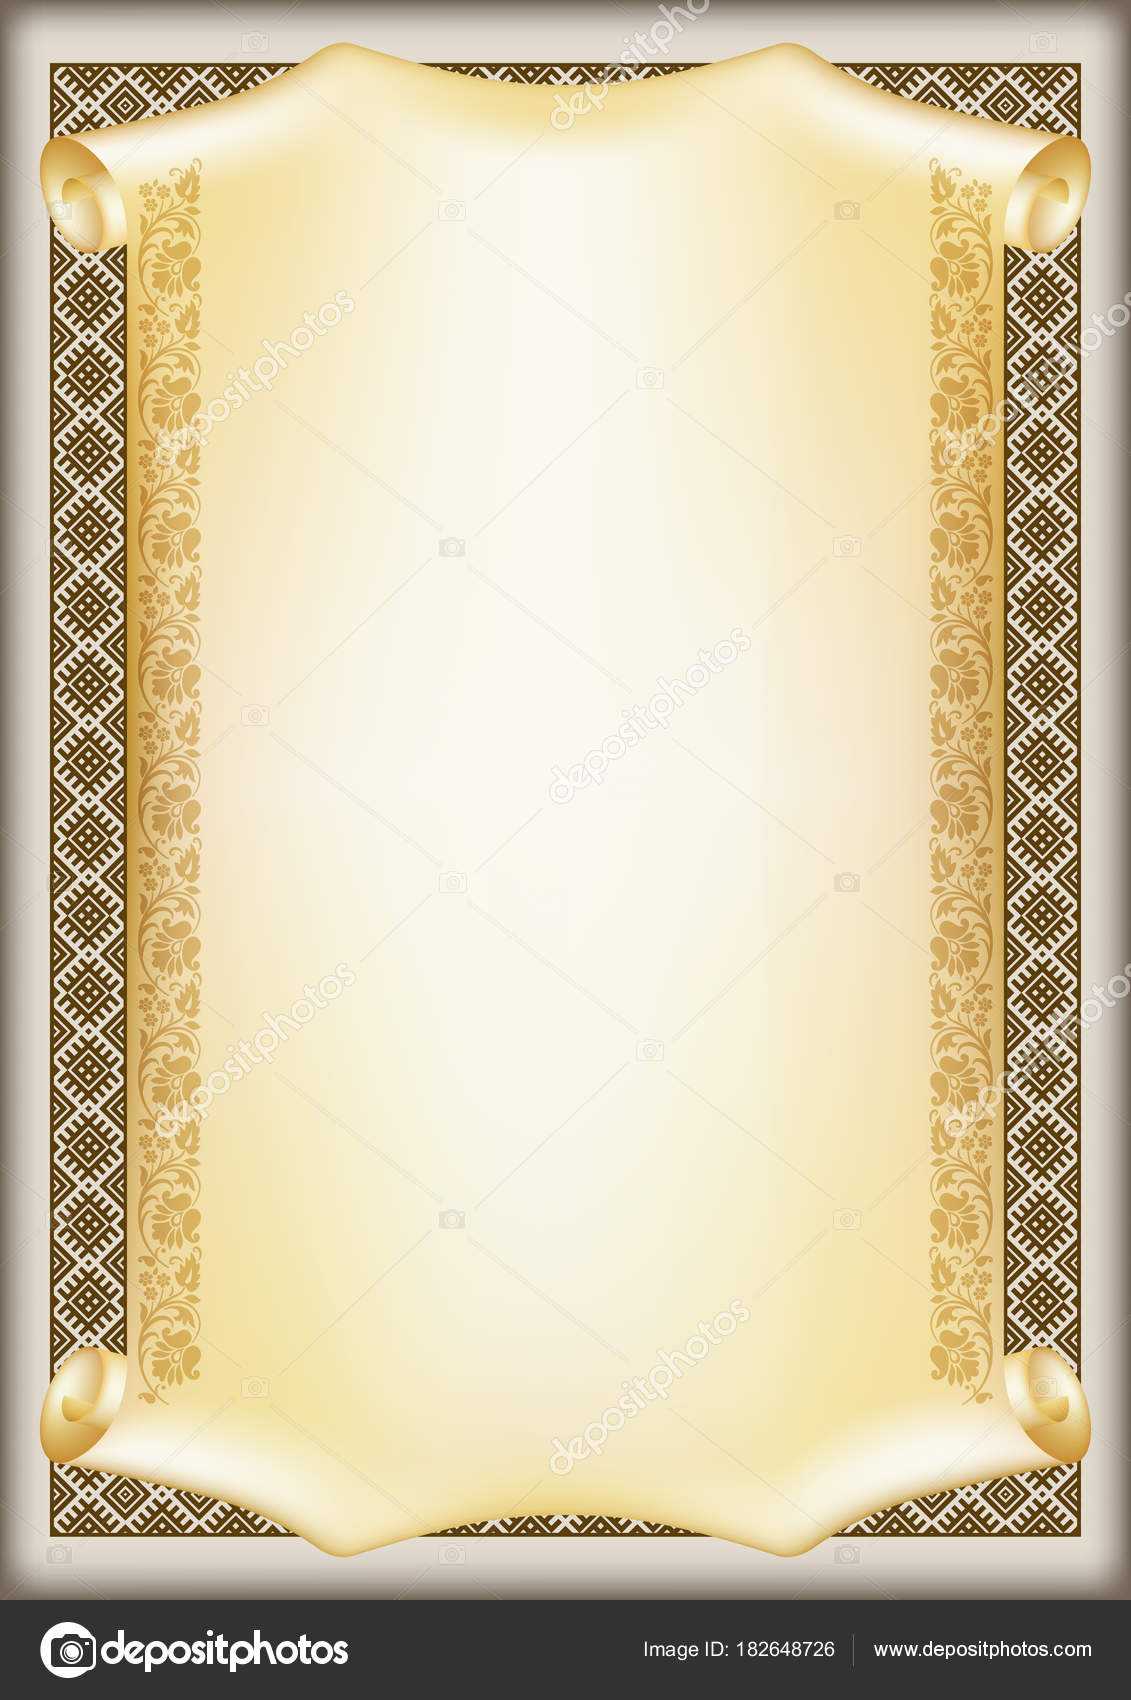 Decorative Rectangular Framework Ethnic Slavic Ornament With Scroll Certificate Templates